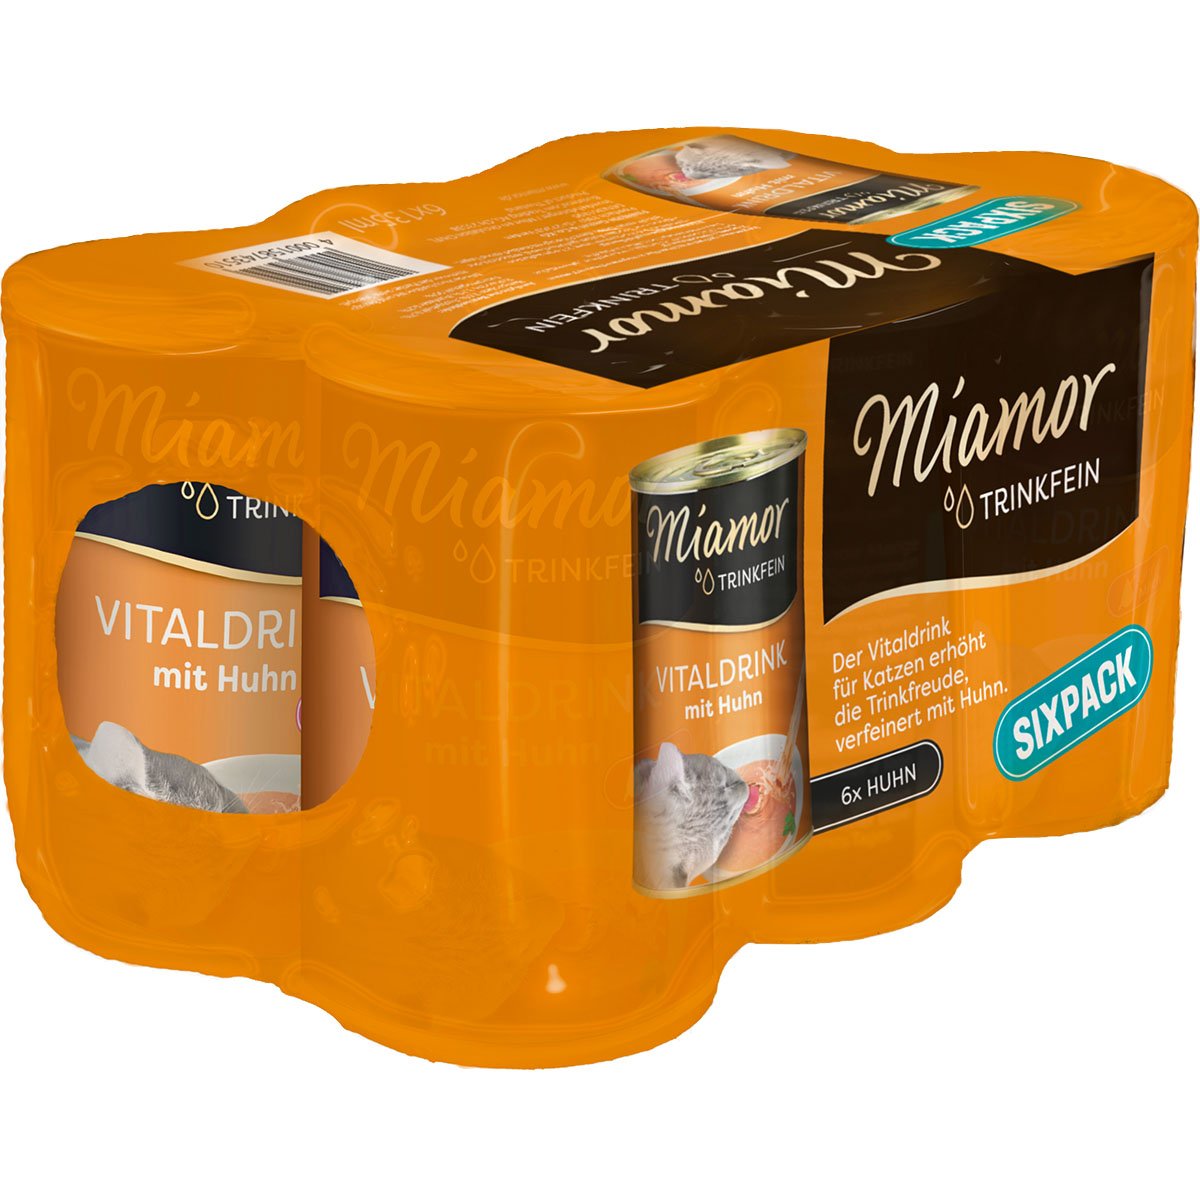 Miamor Trinkfein - Vitaldrink mit Huhn Sixpack 24x135ml von Miamor